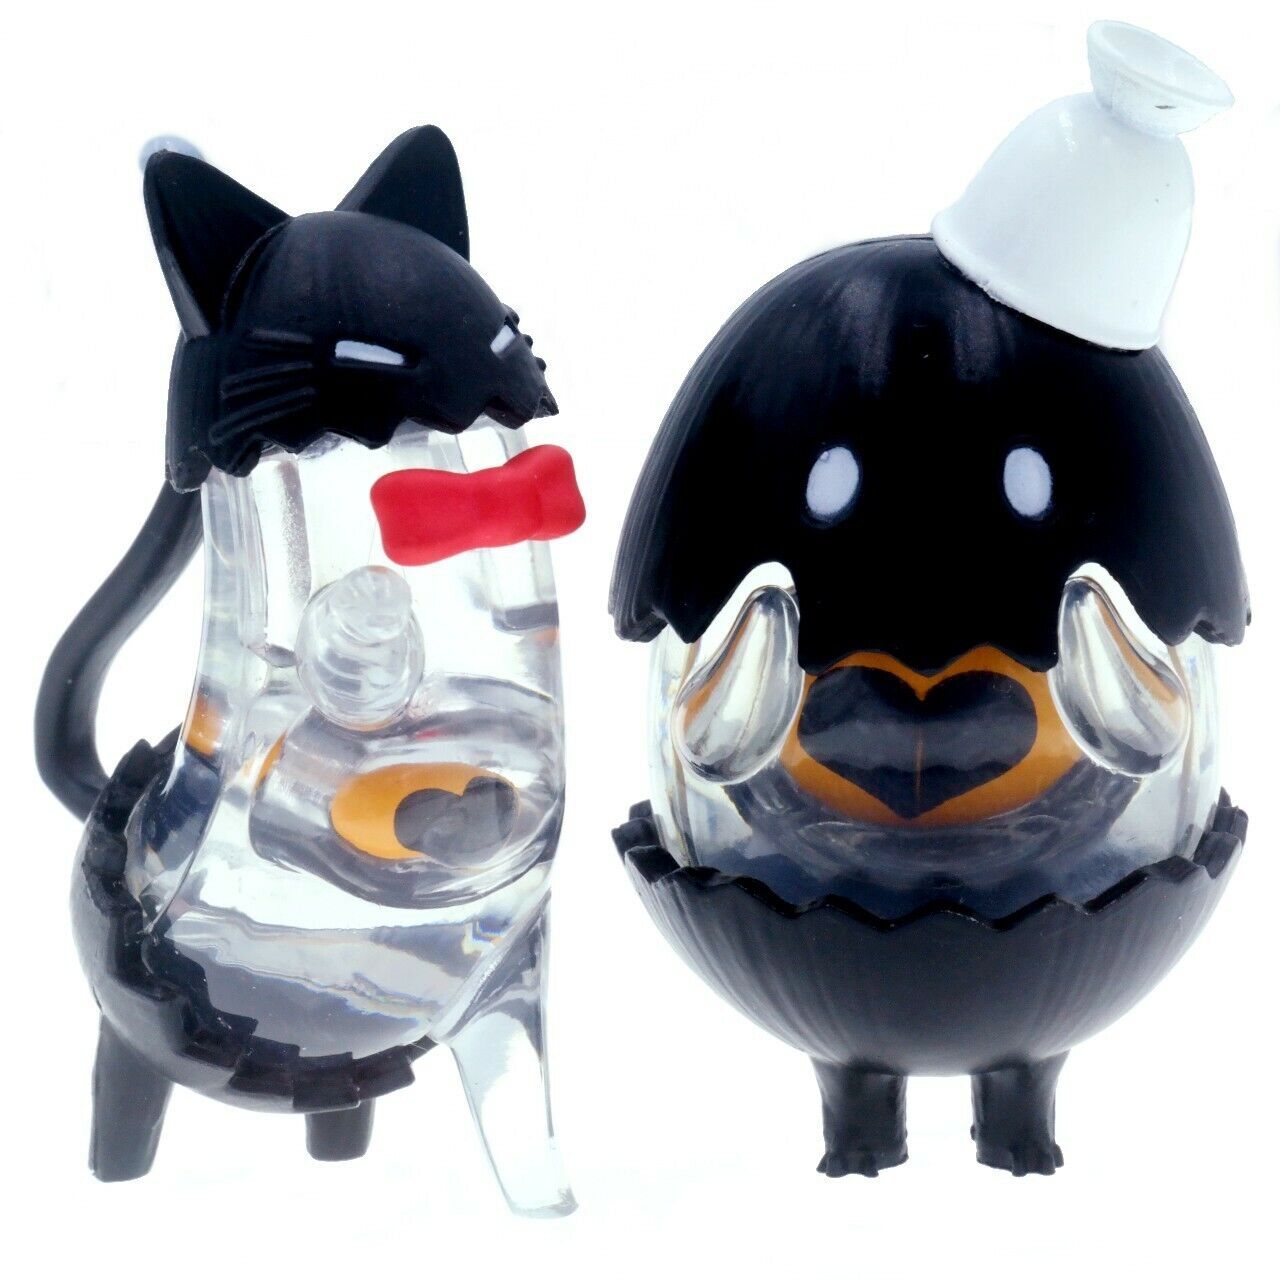 Japanese Blind Box Collectible Clear Cute Alien Black White Cat 1 Random Figure